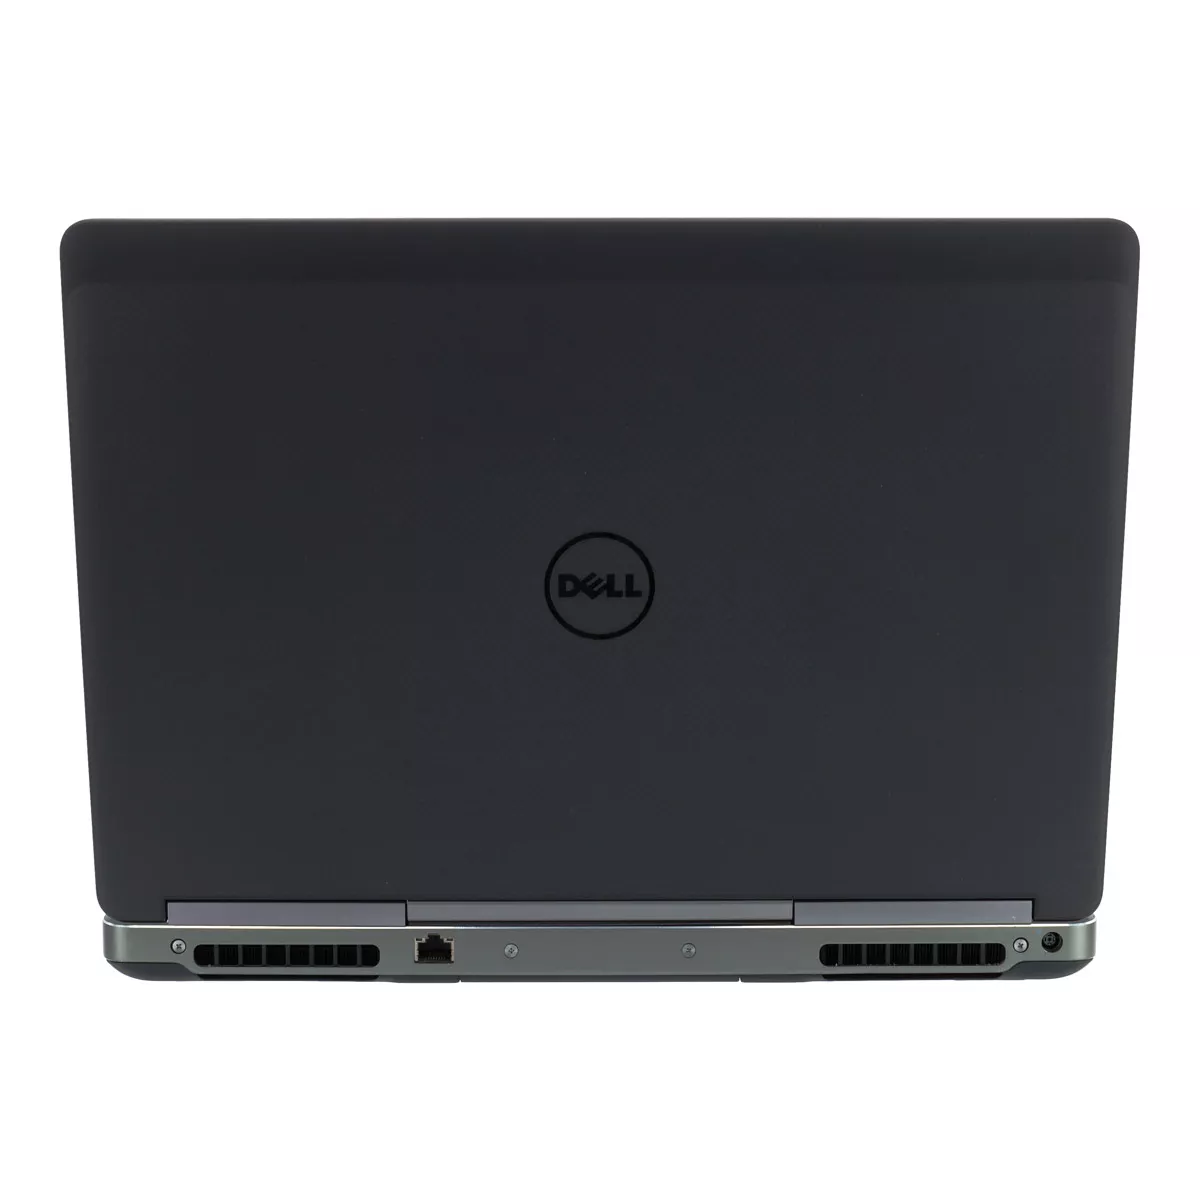 Dell Precision 7520 Core i7 7820HQ nVidia Quadro M2200M 16 GB 500 GB M.2 nVME SSD Webcam B